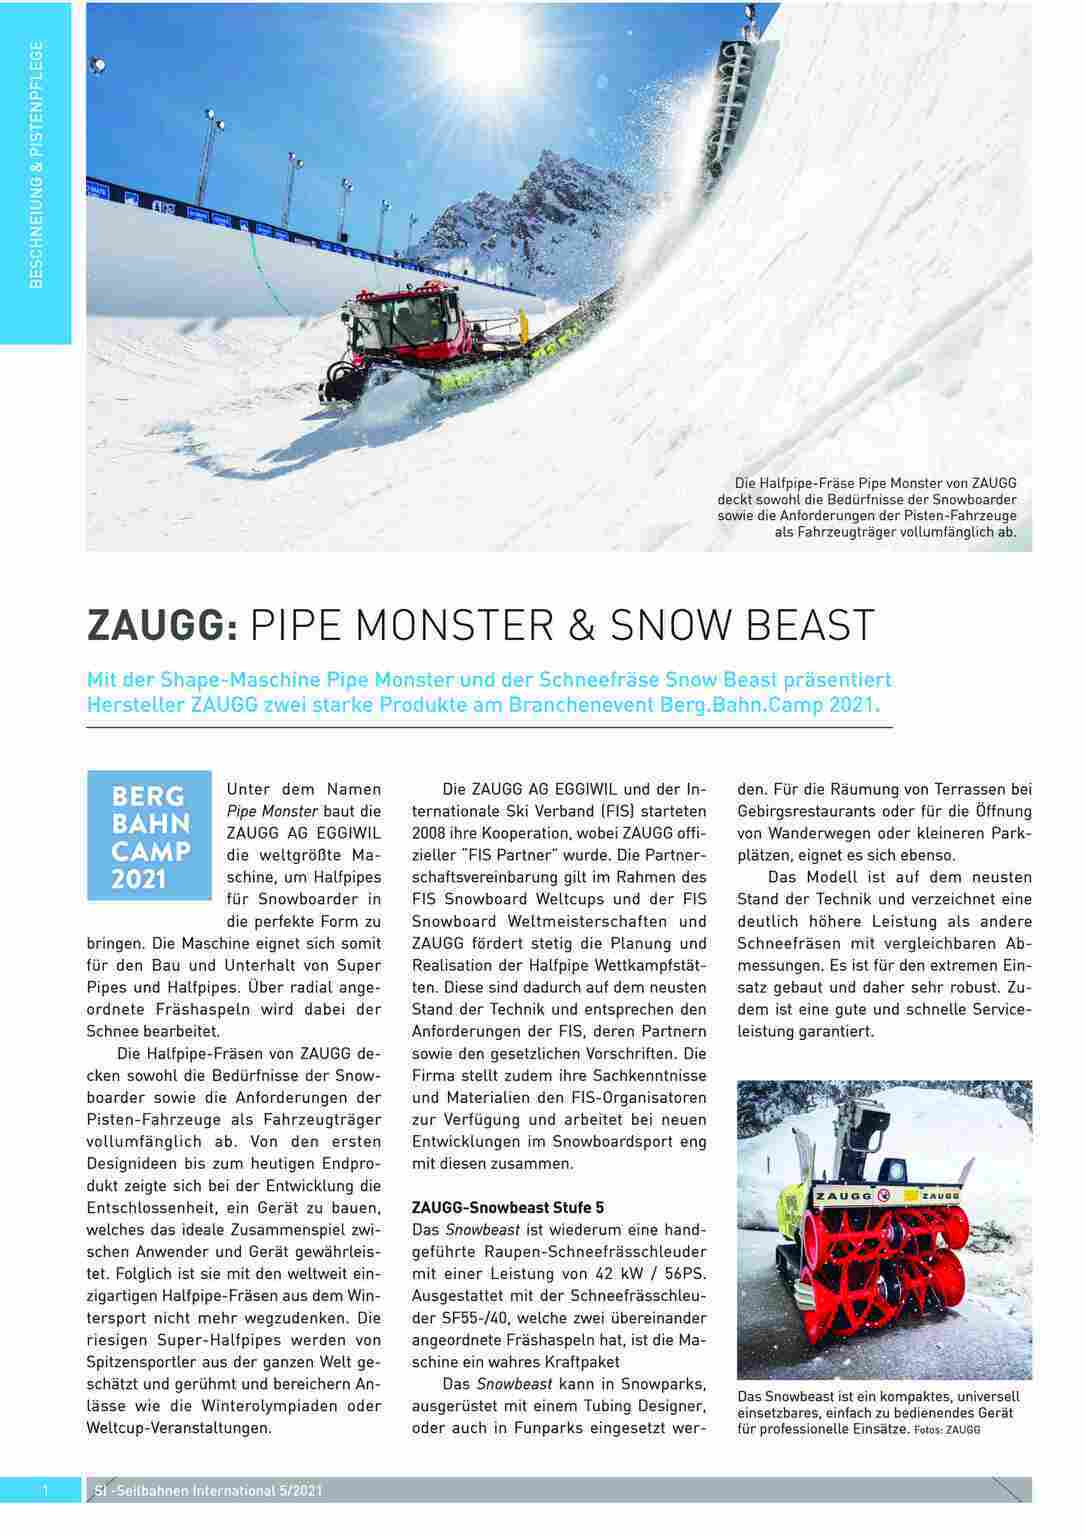 SI Seilbahnen International: Article Pipe Monster et Snowbeast